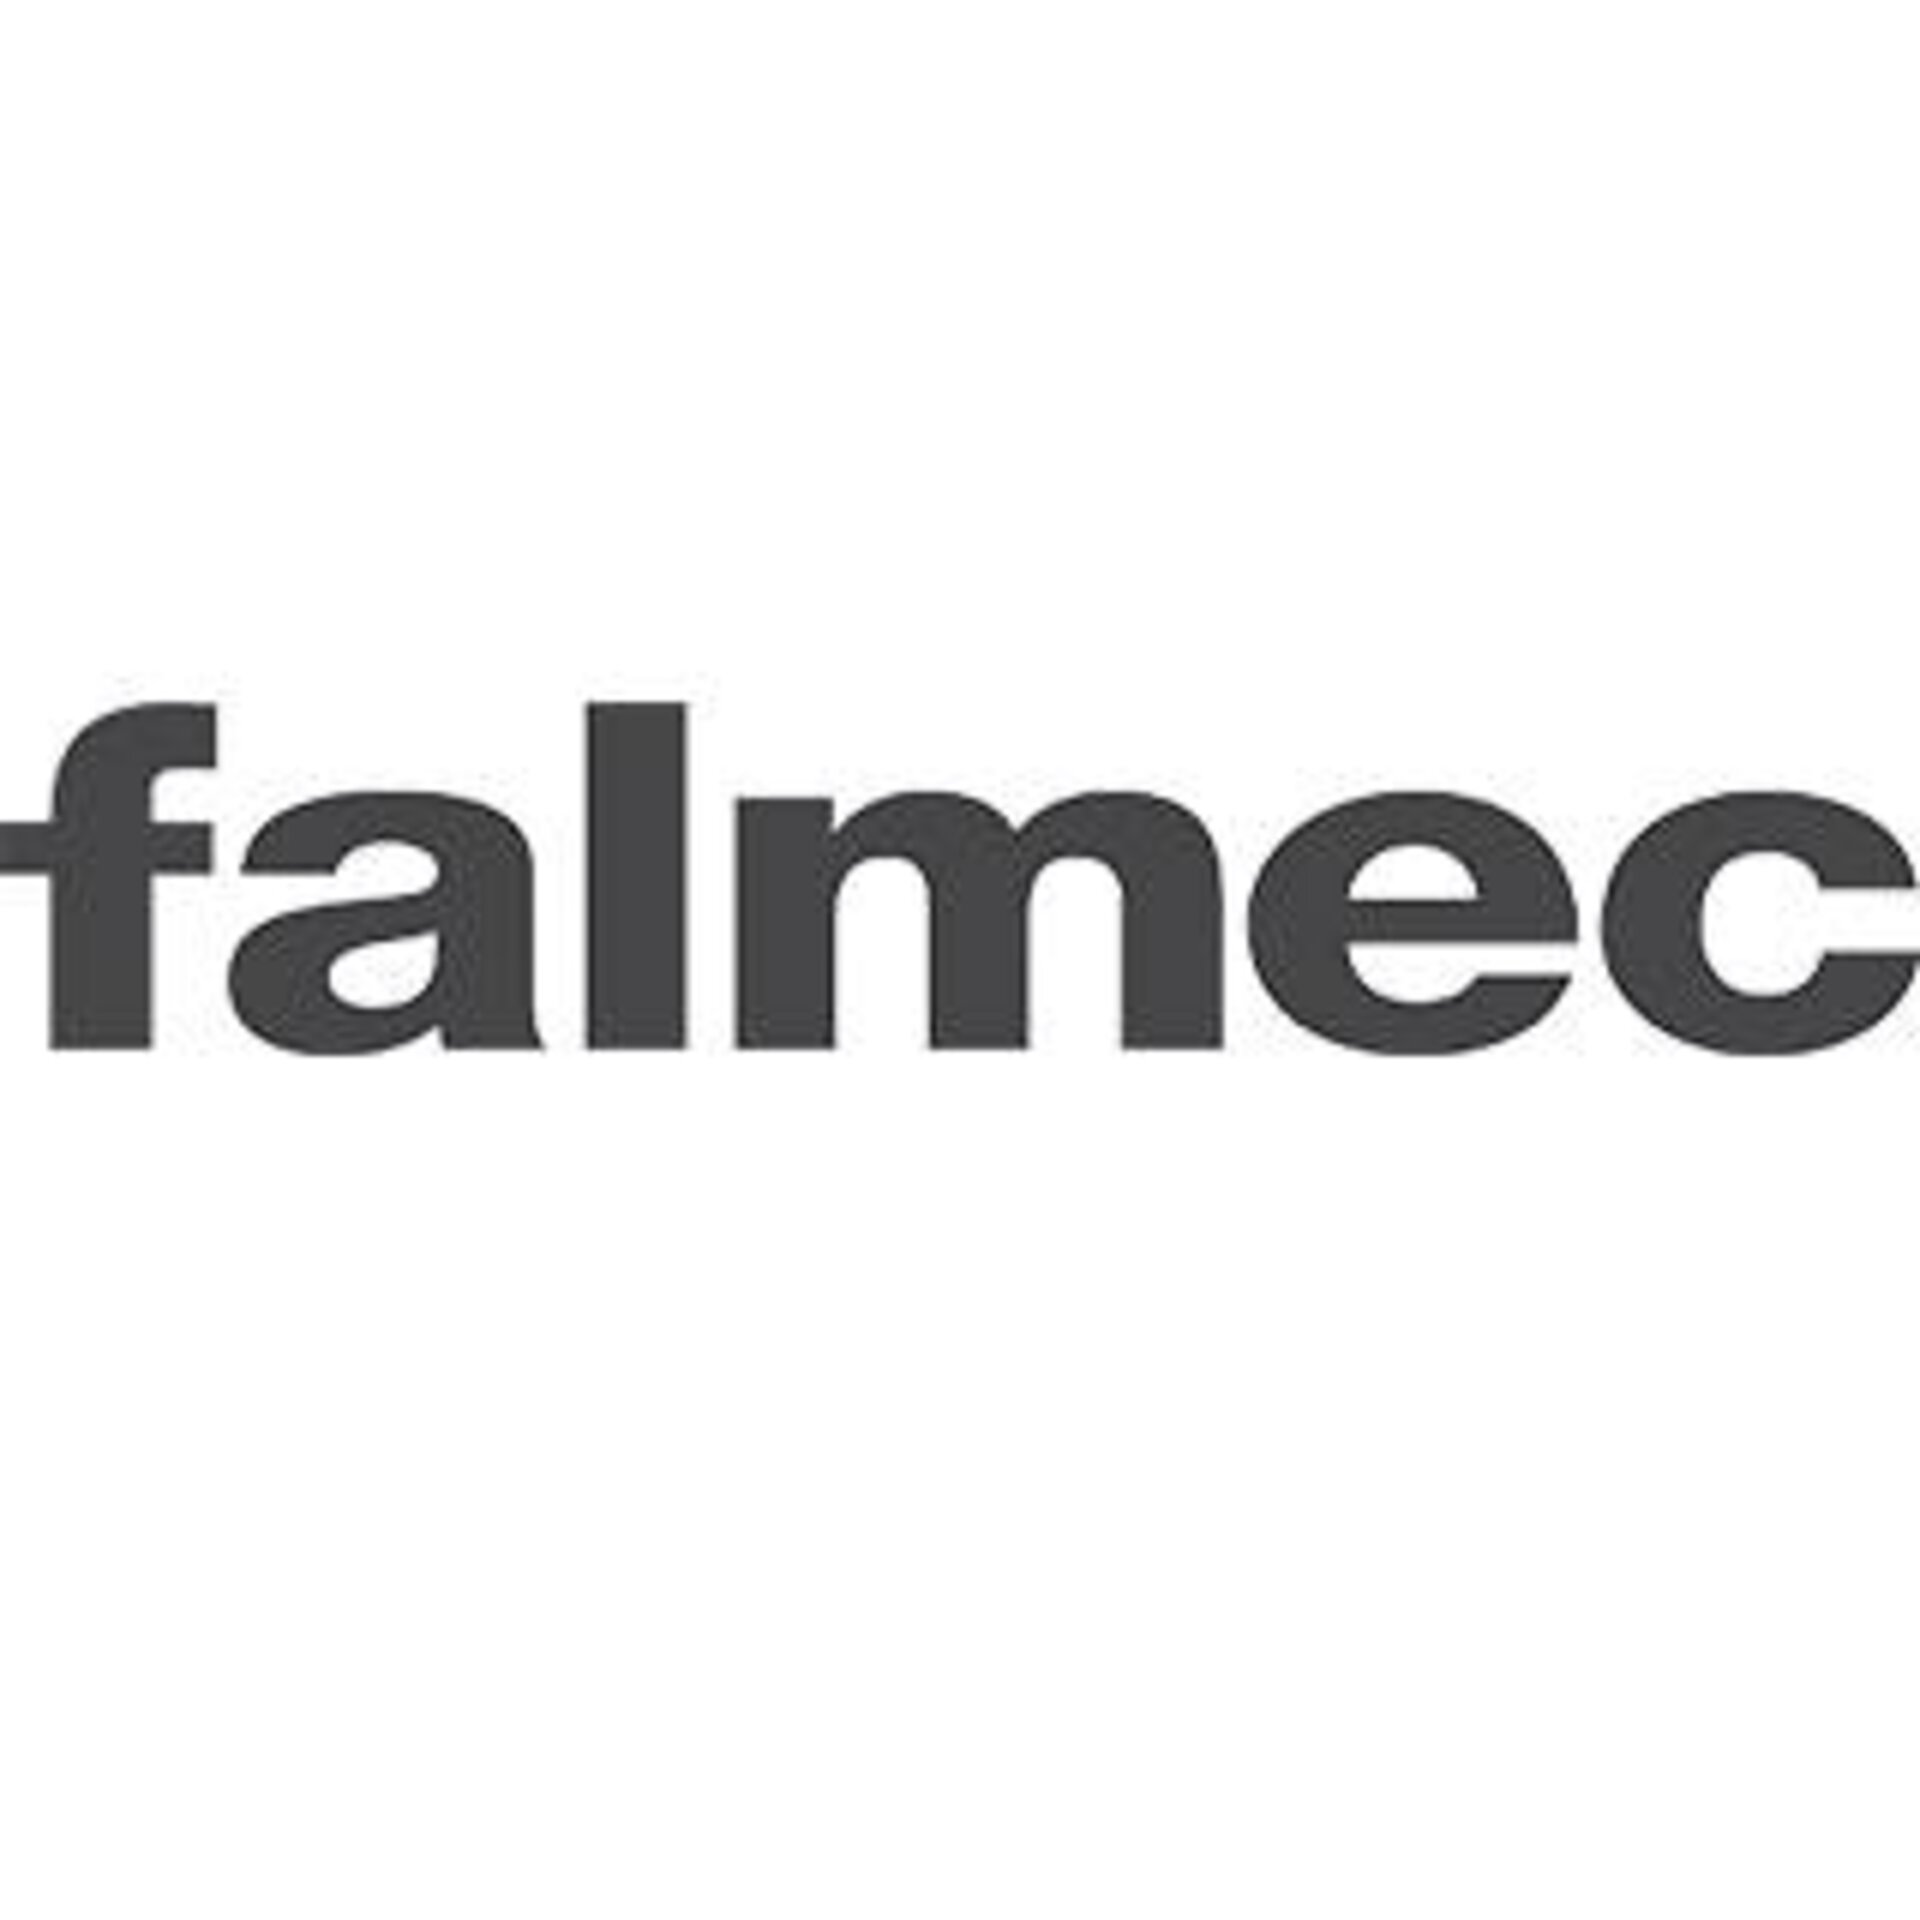 falmec Logo